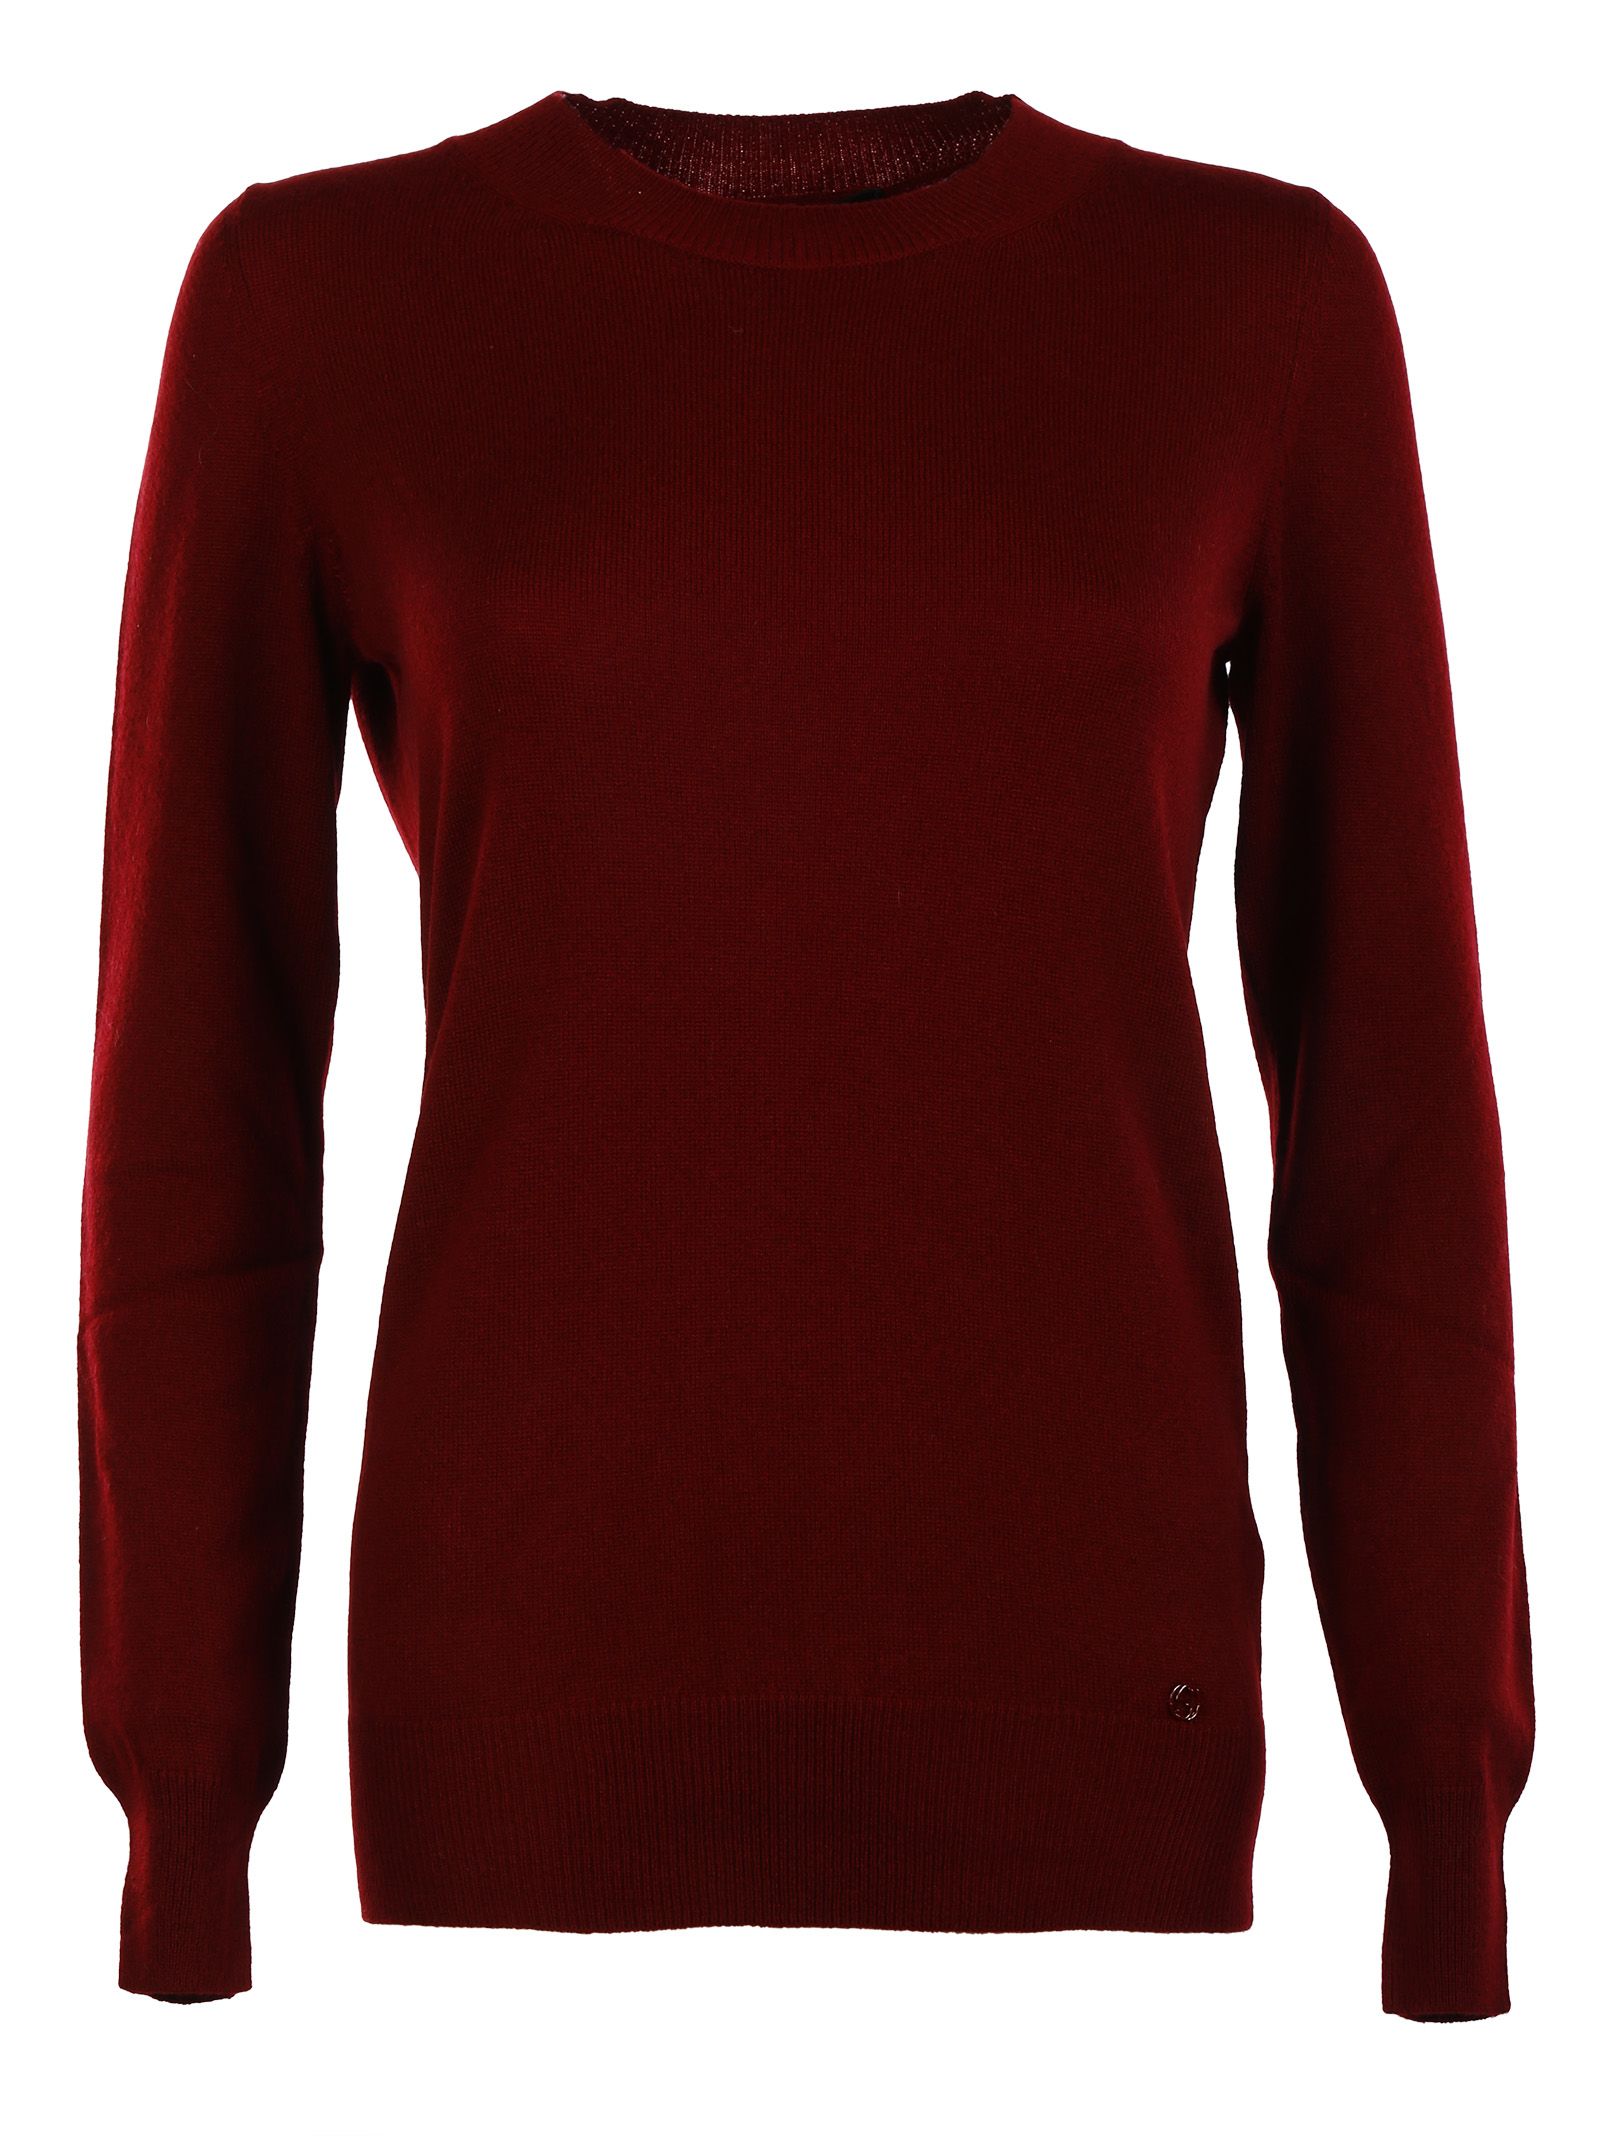 Gucci - Gucci Cashmere Crewneck Sweater - Bordeaux, Women's Sweaters ...